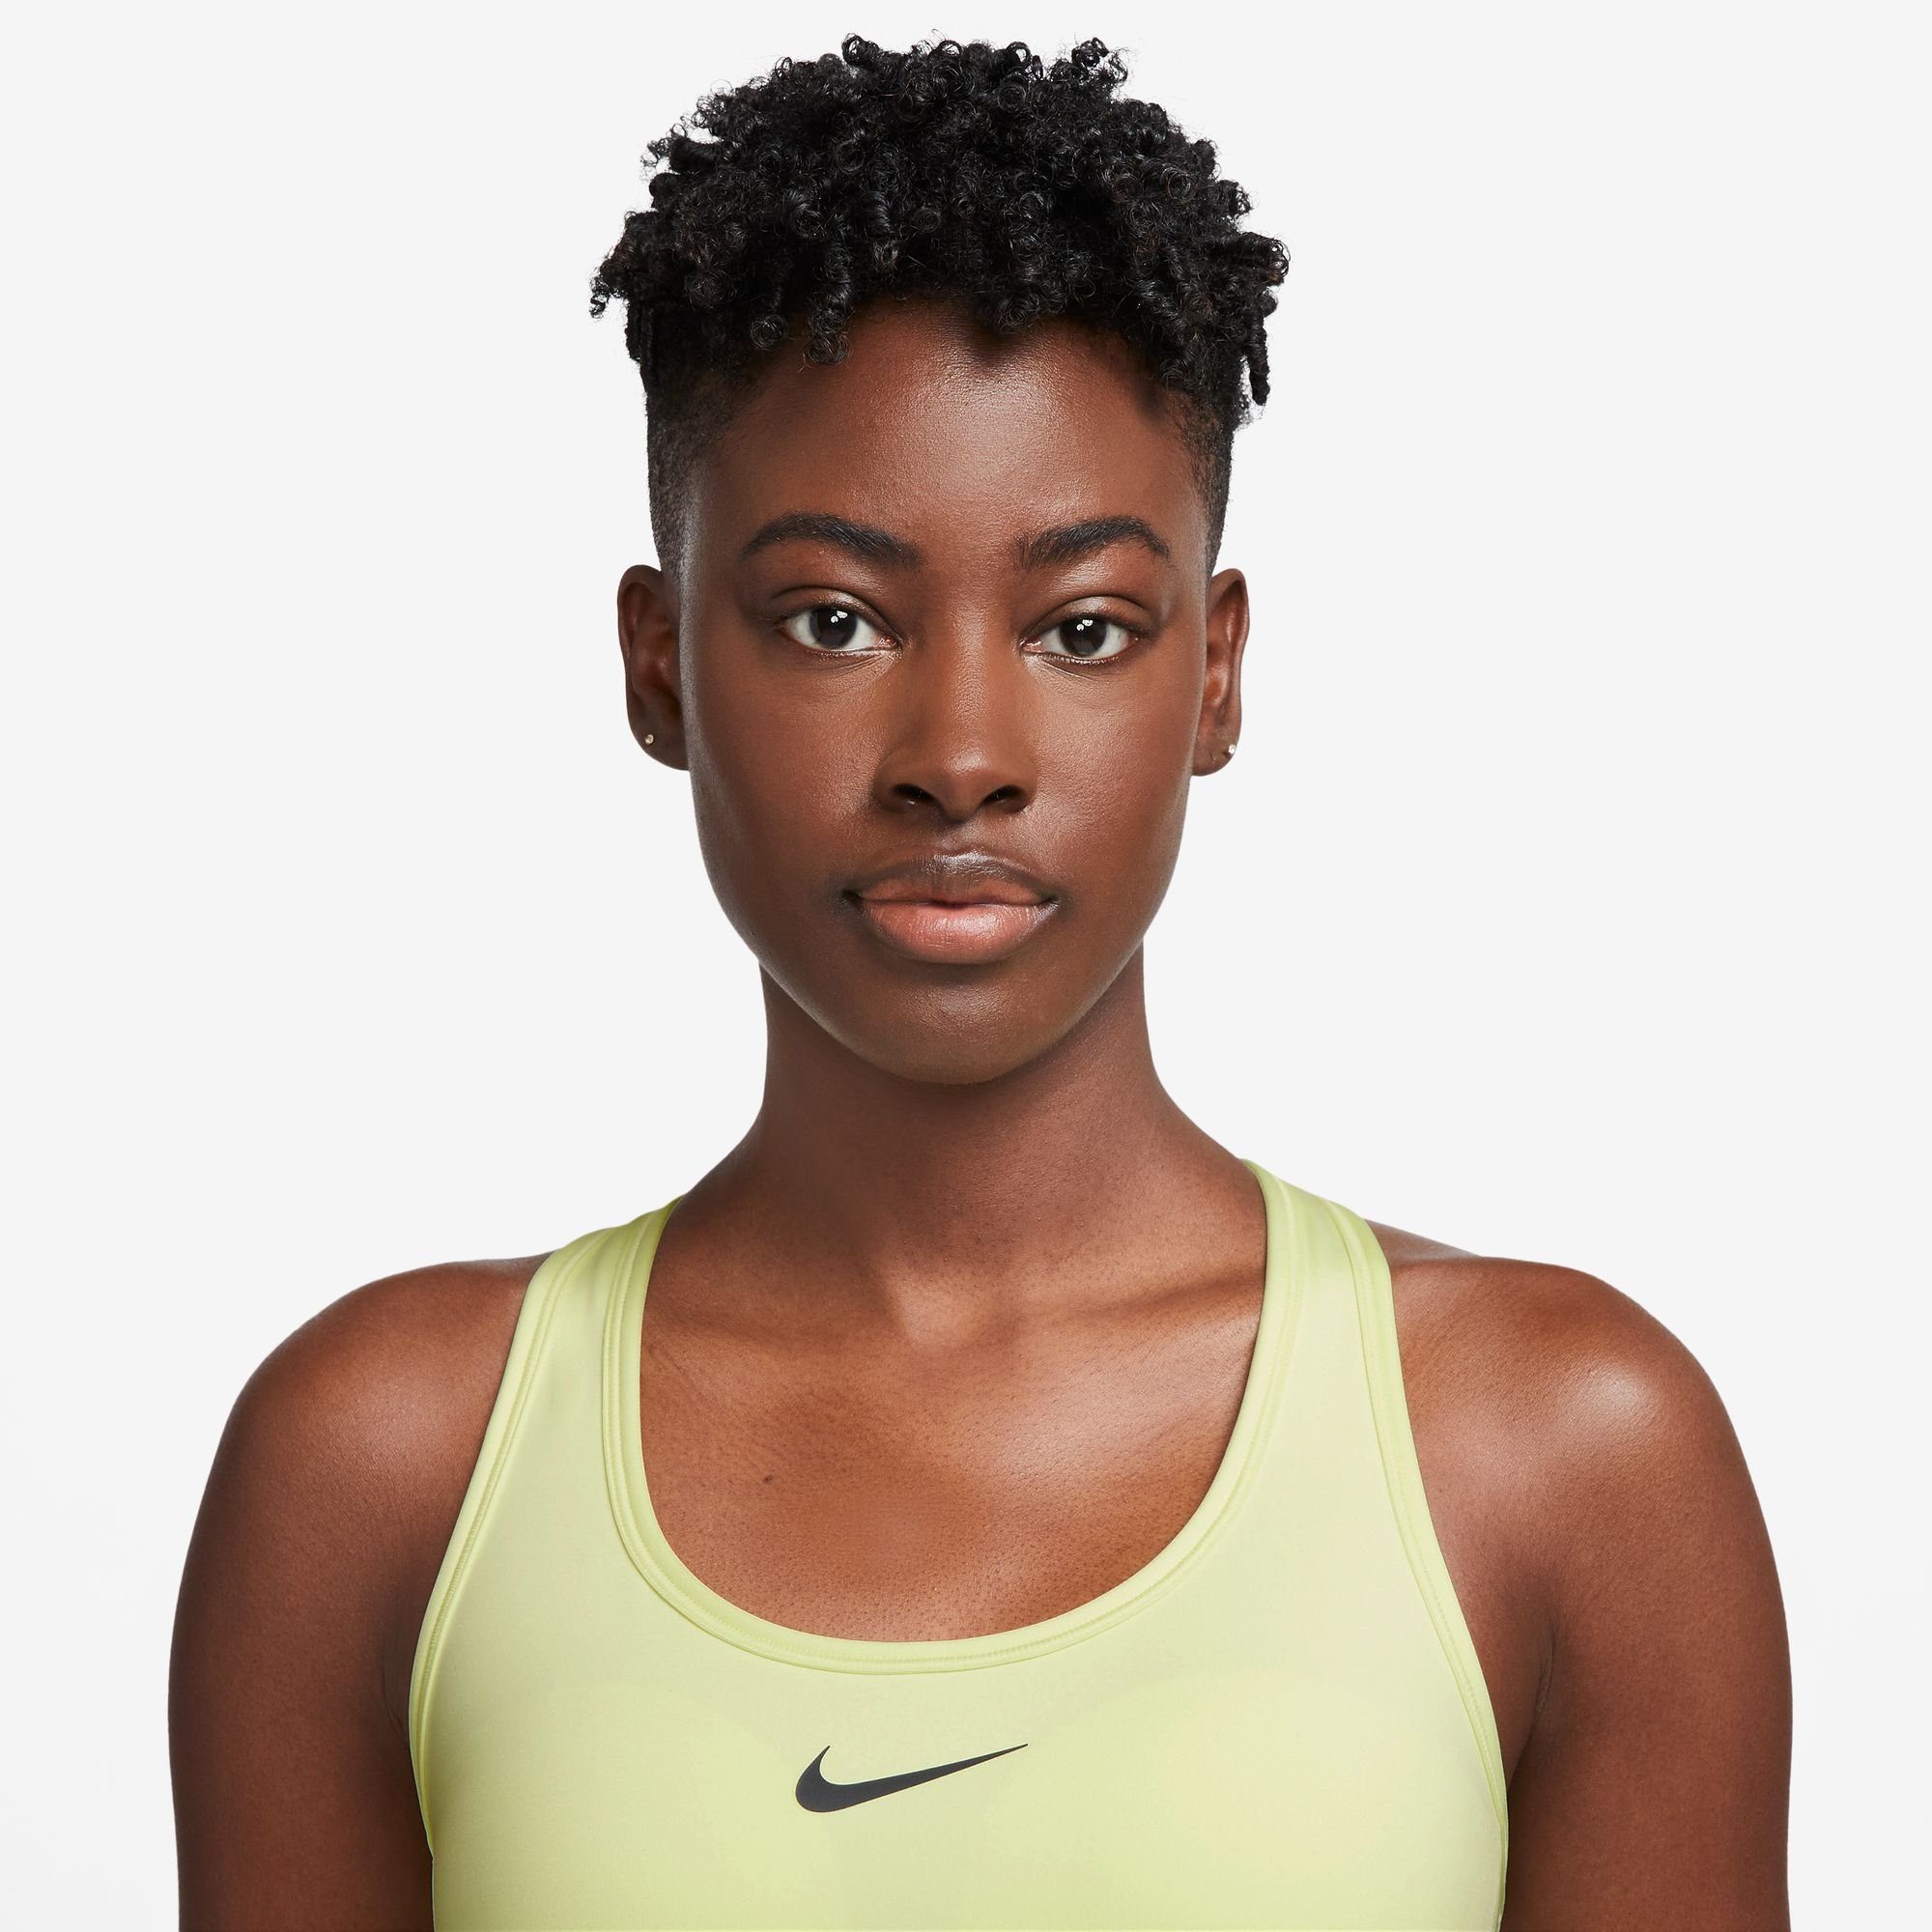 WOMEN'S PADDED GREEN/BLACK BRA MEDIUM SPORTS LUMINOUS Nike SUPPORT SWOOSH Sport-BH